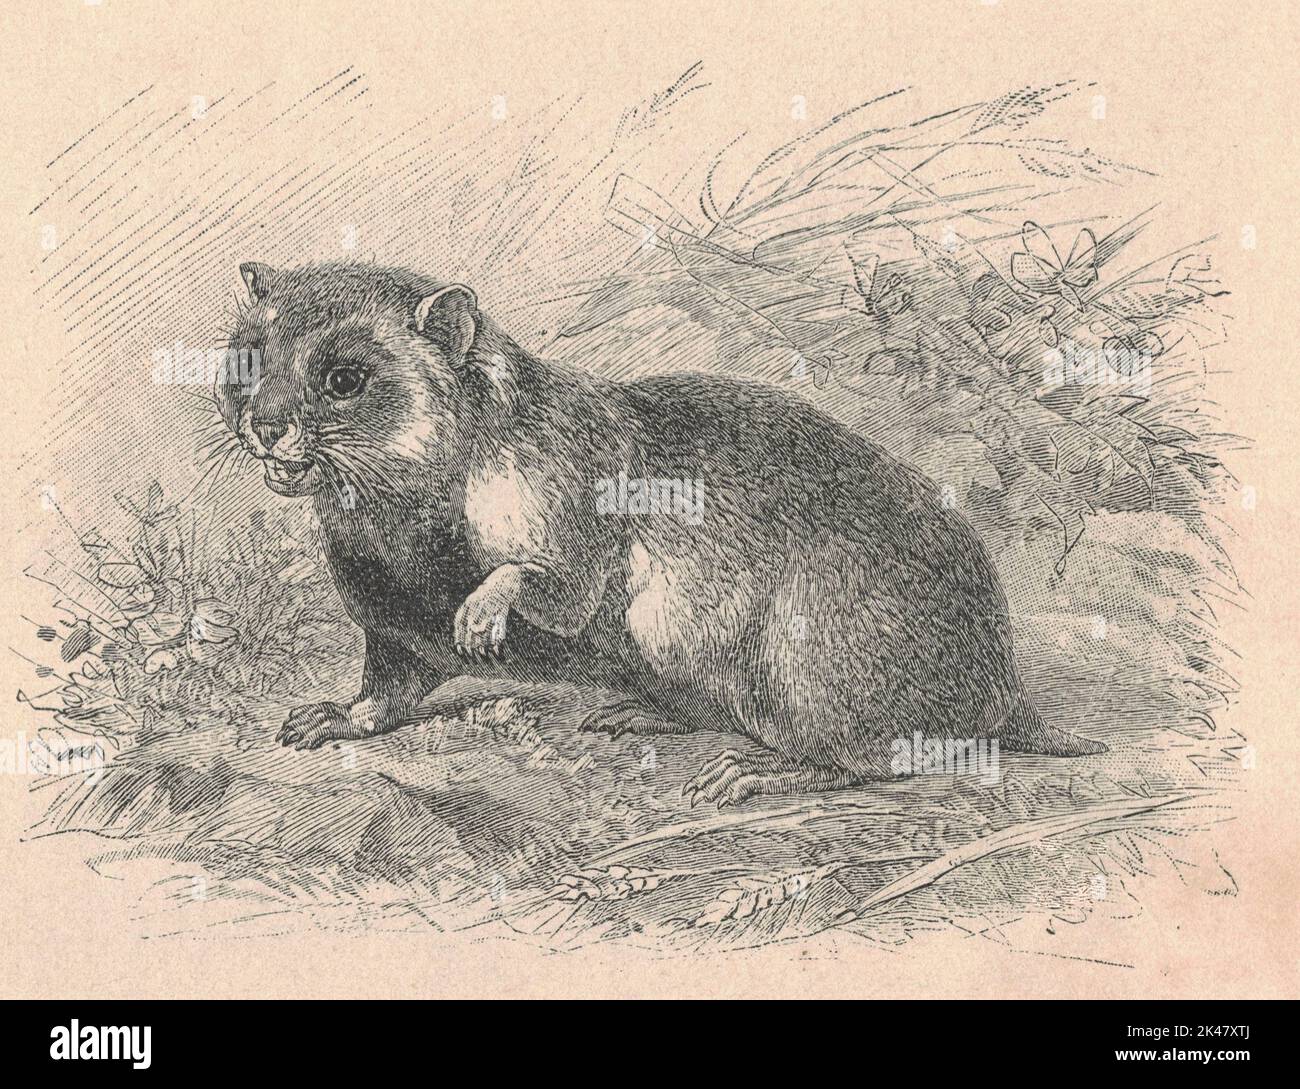 Antike gravierte Illustration des Hamsters. Vintage-Illustration des Hamsters. Antikes graviertes Bild des Tieres. Stockfoto